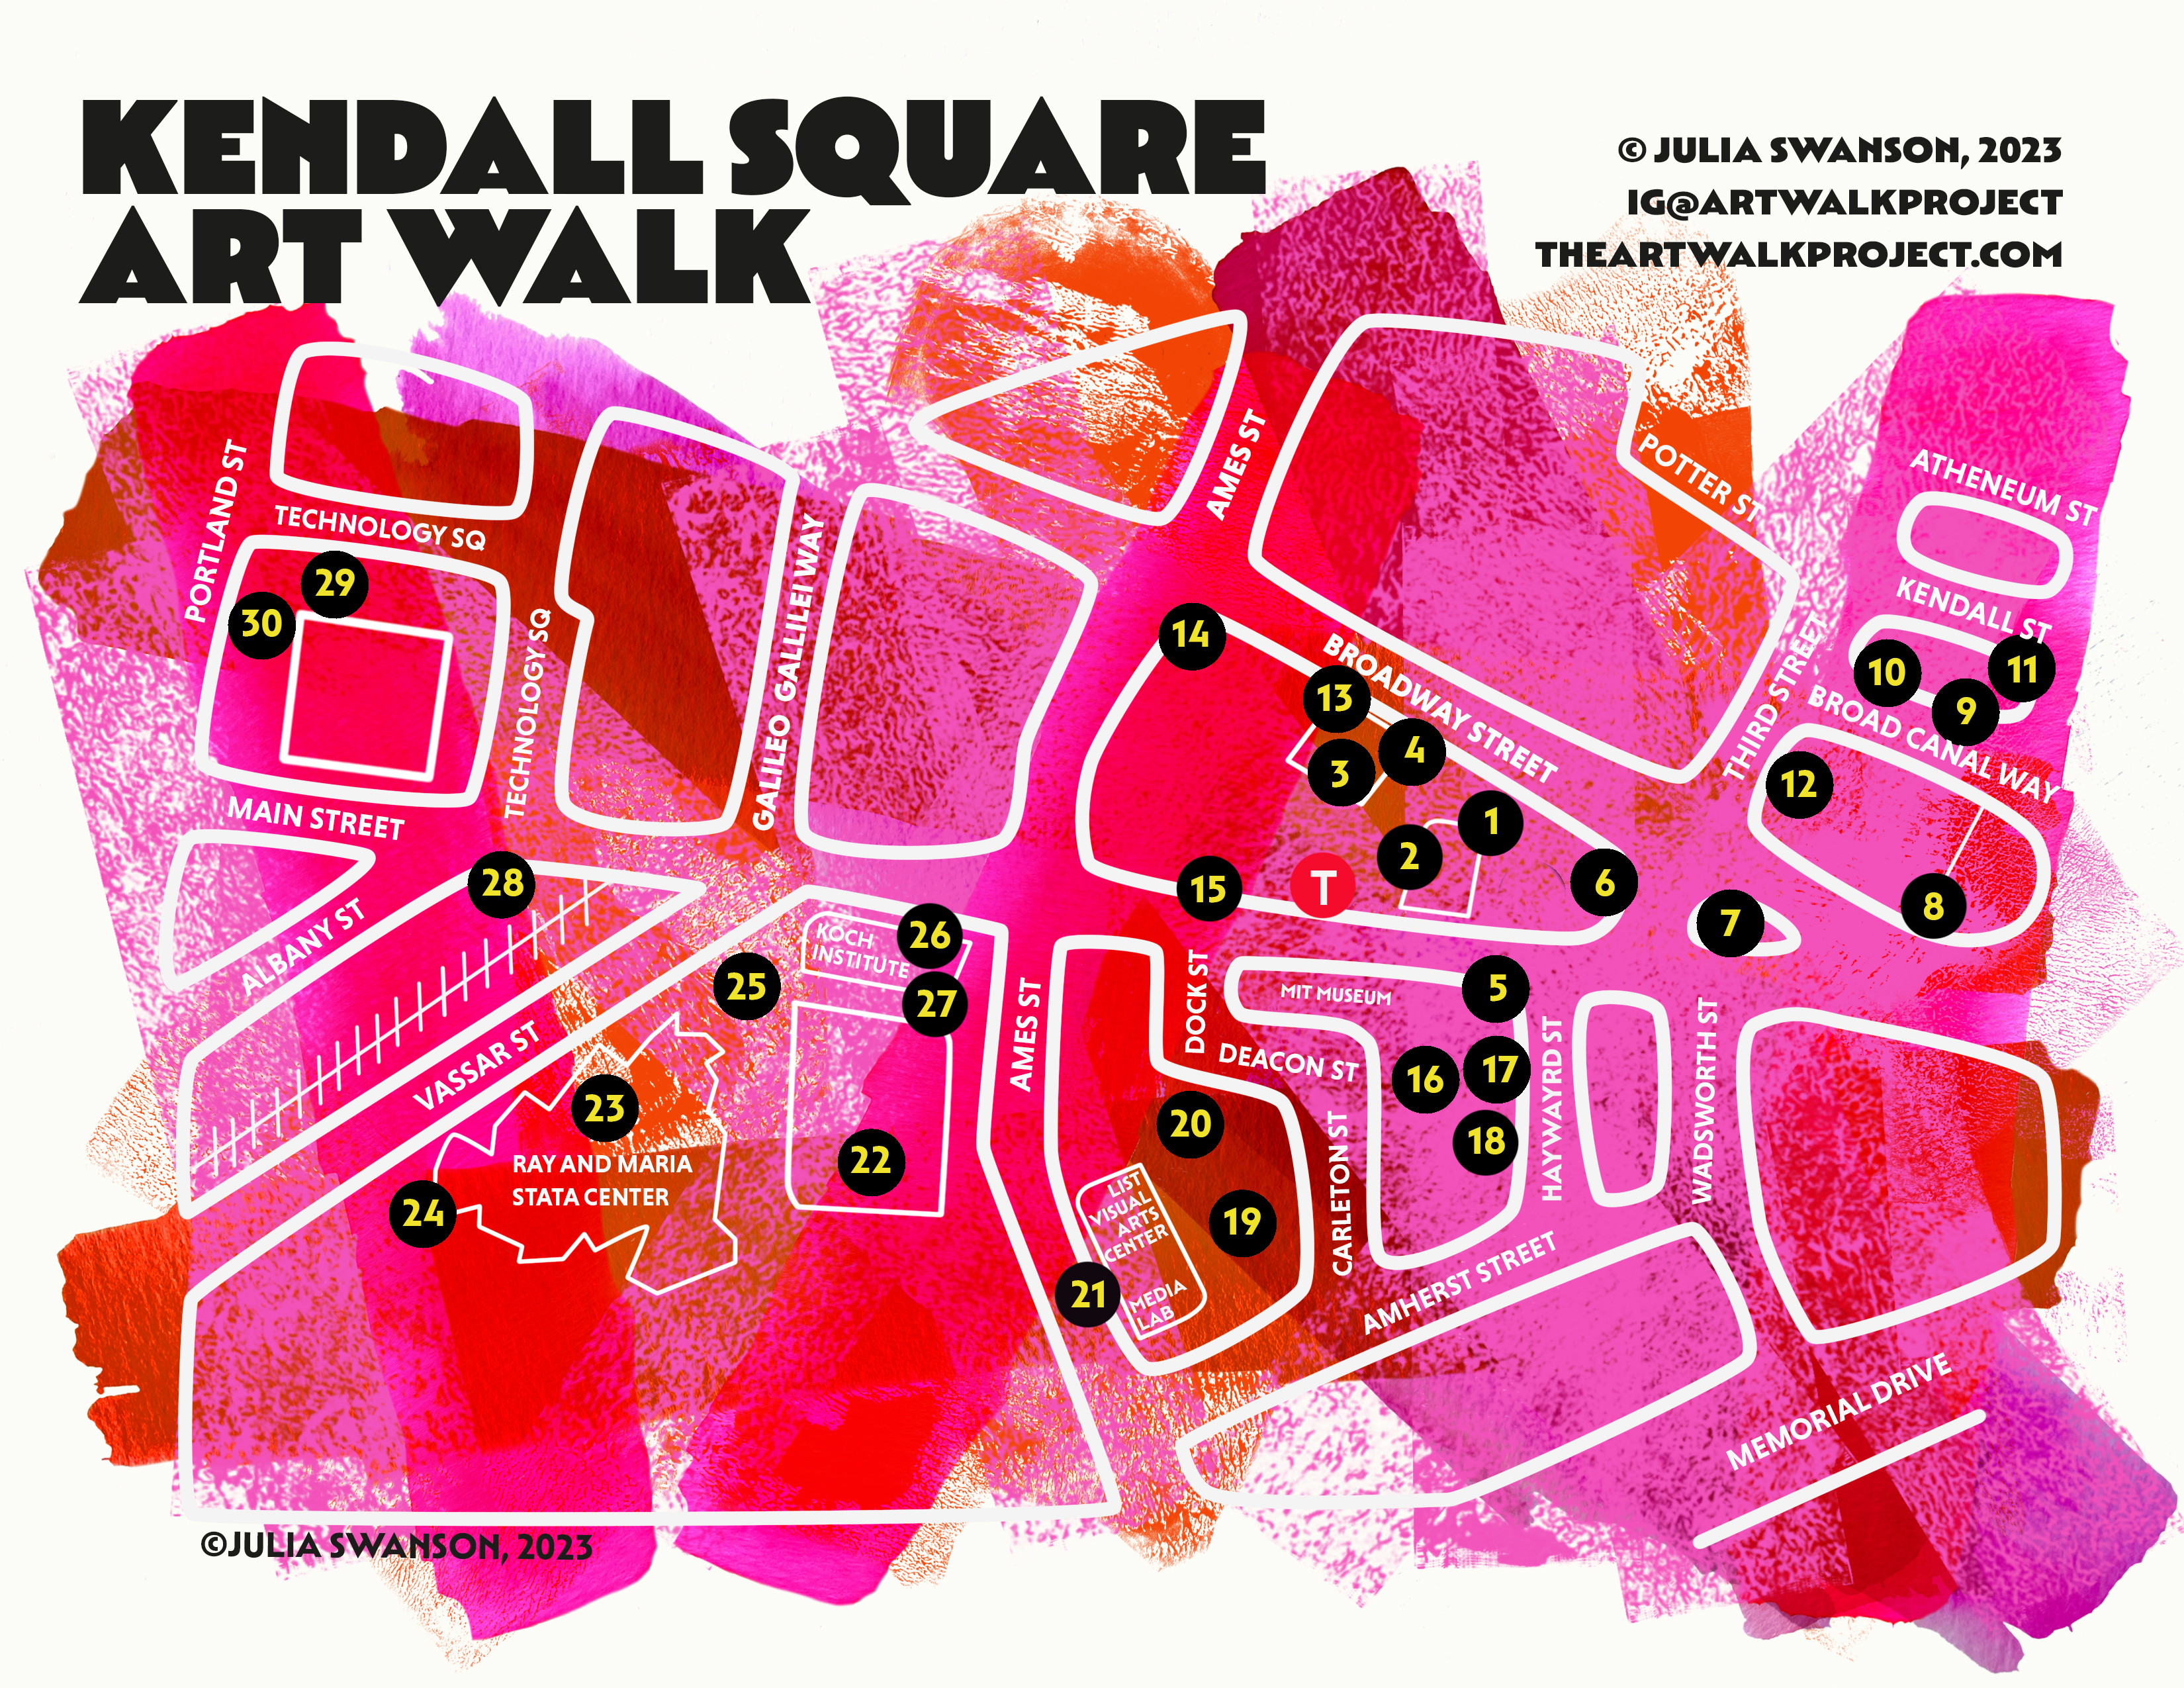 Kendall Square Art Walk